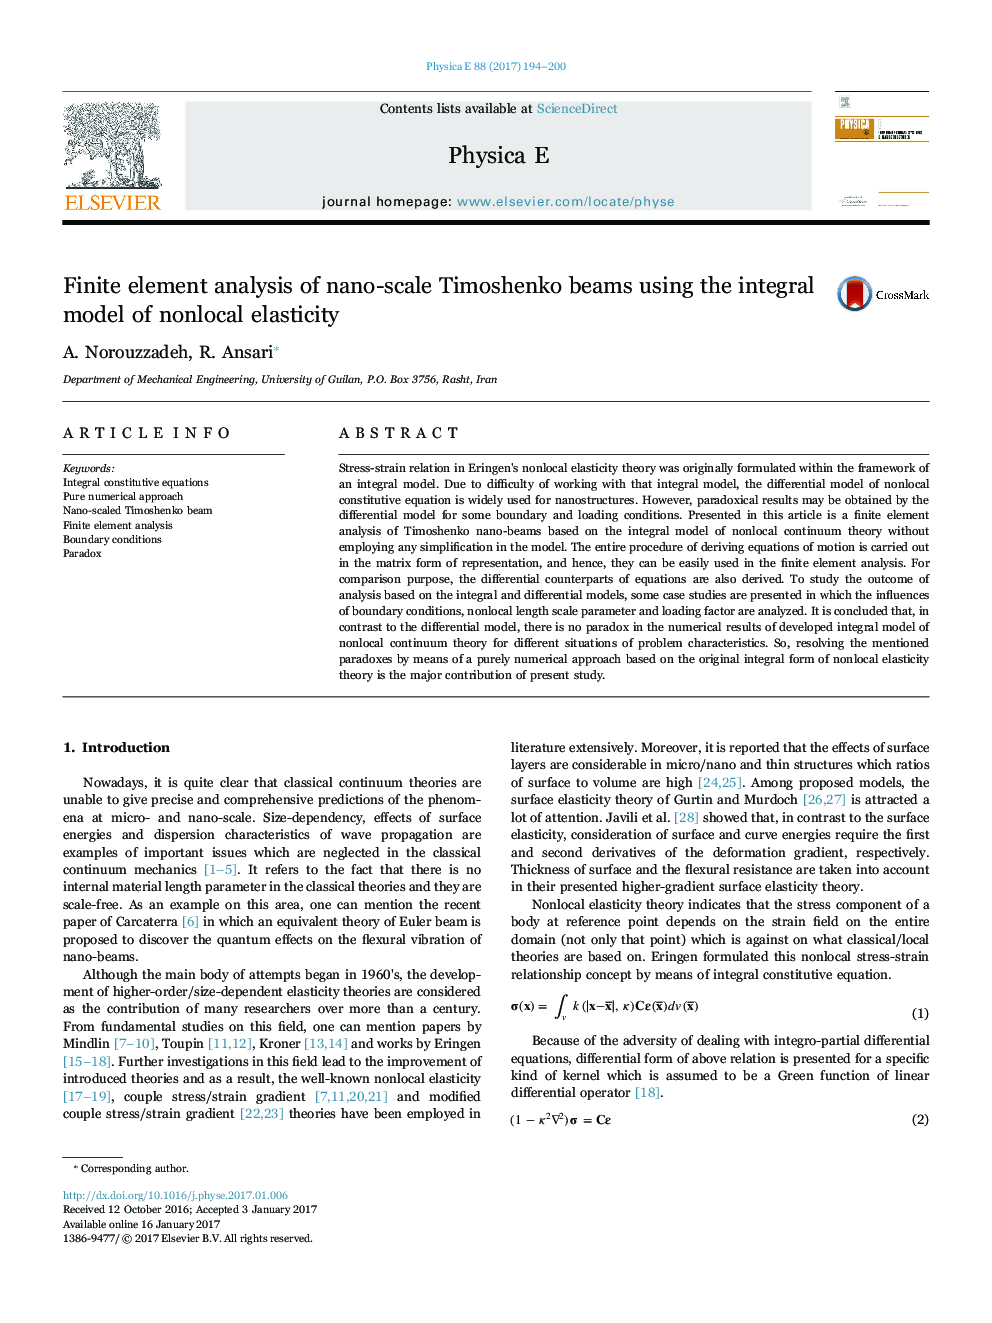 Finite element analysis of nano-scale Timoshenko beams using the integral model of nonlocal elasticity